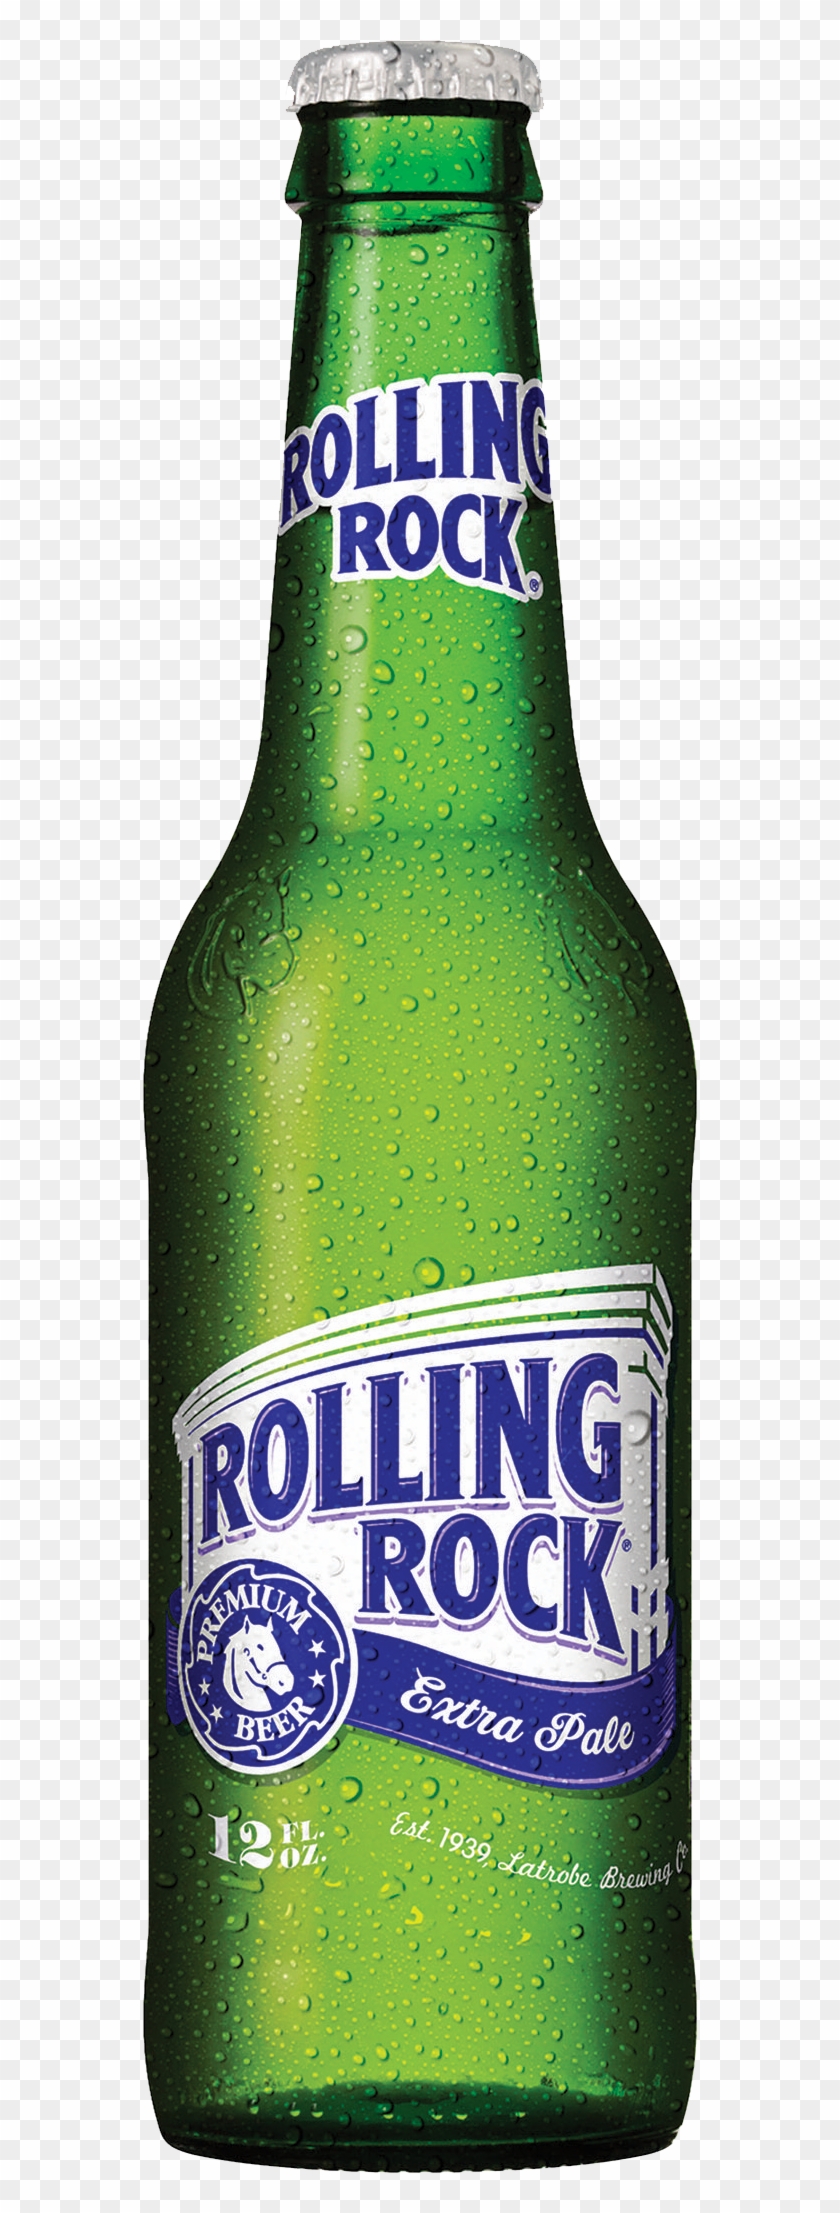 Rolling Rock - Rolling Rock Bottle Transparent Clipart #3477605